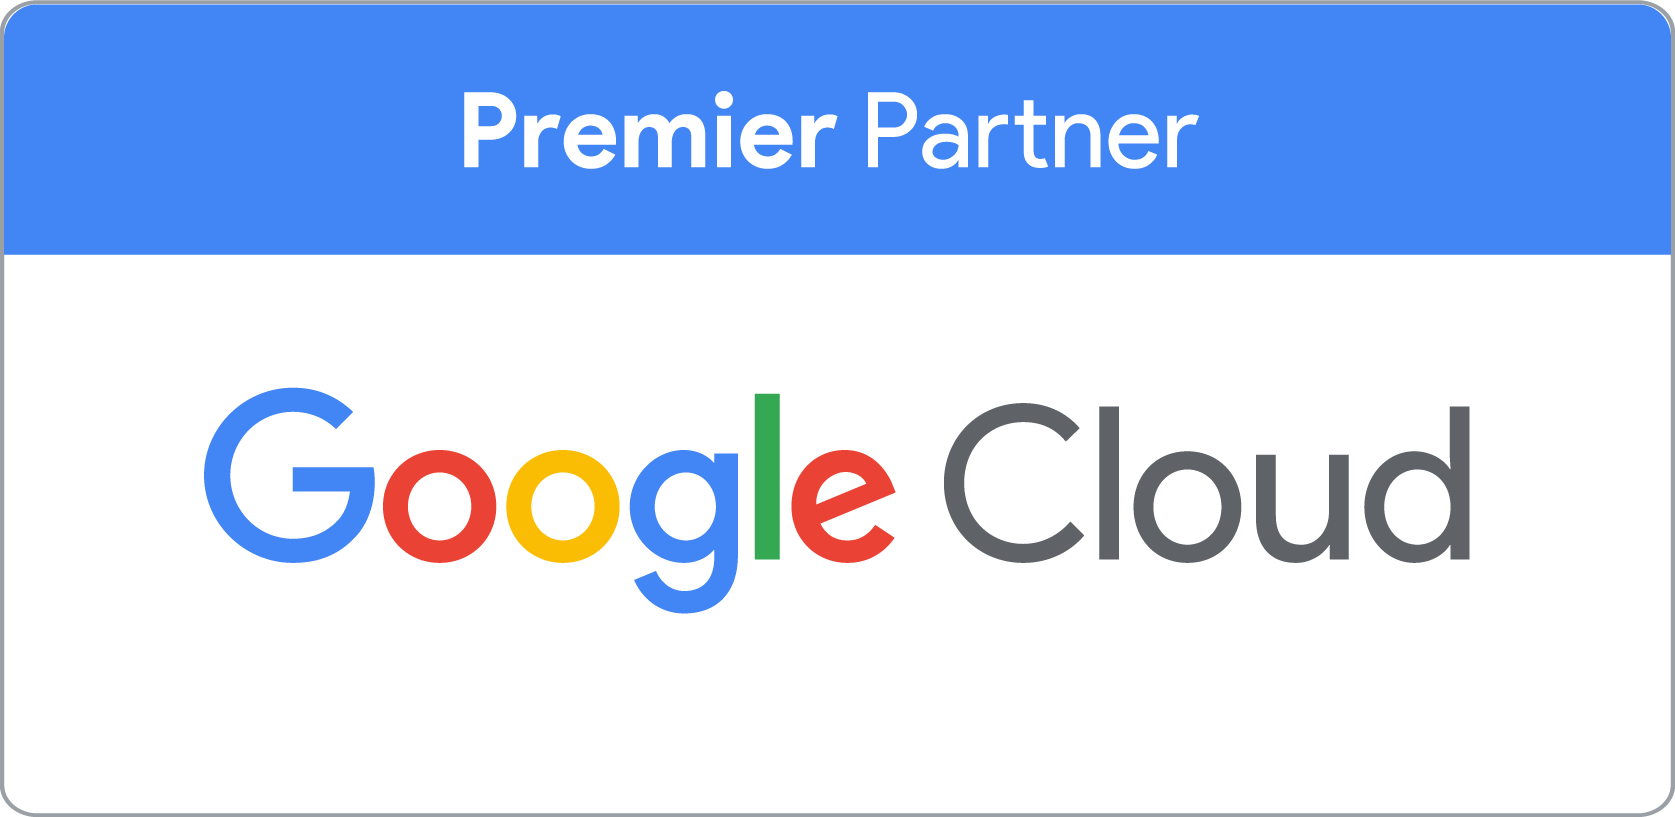 GC_Premier_Partner